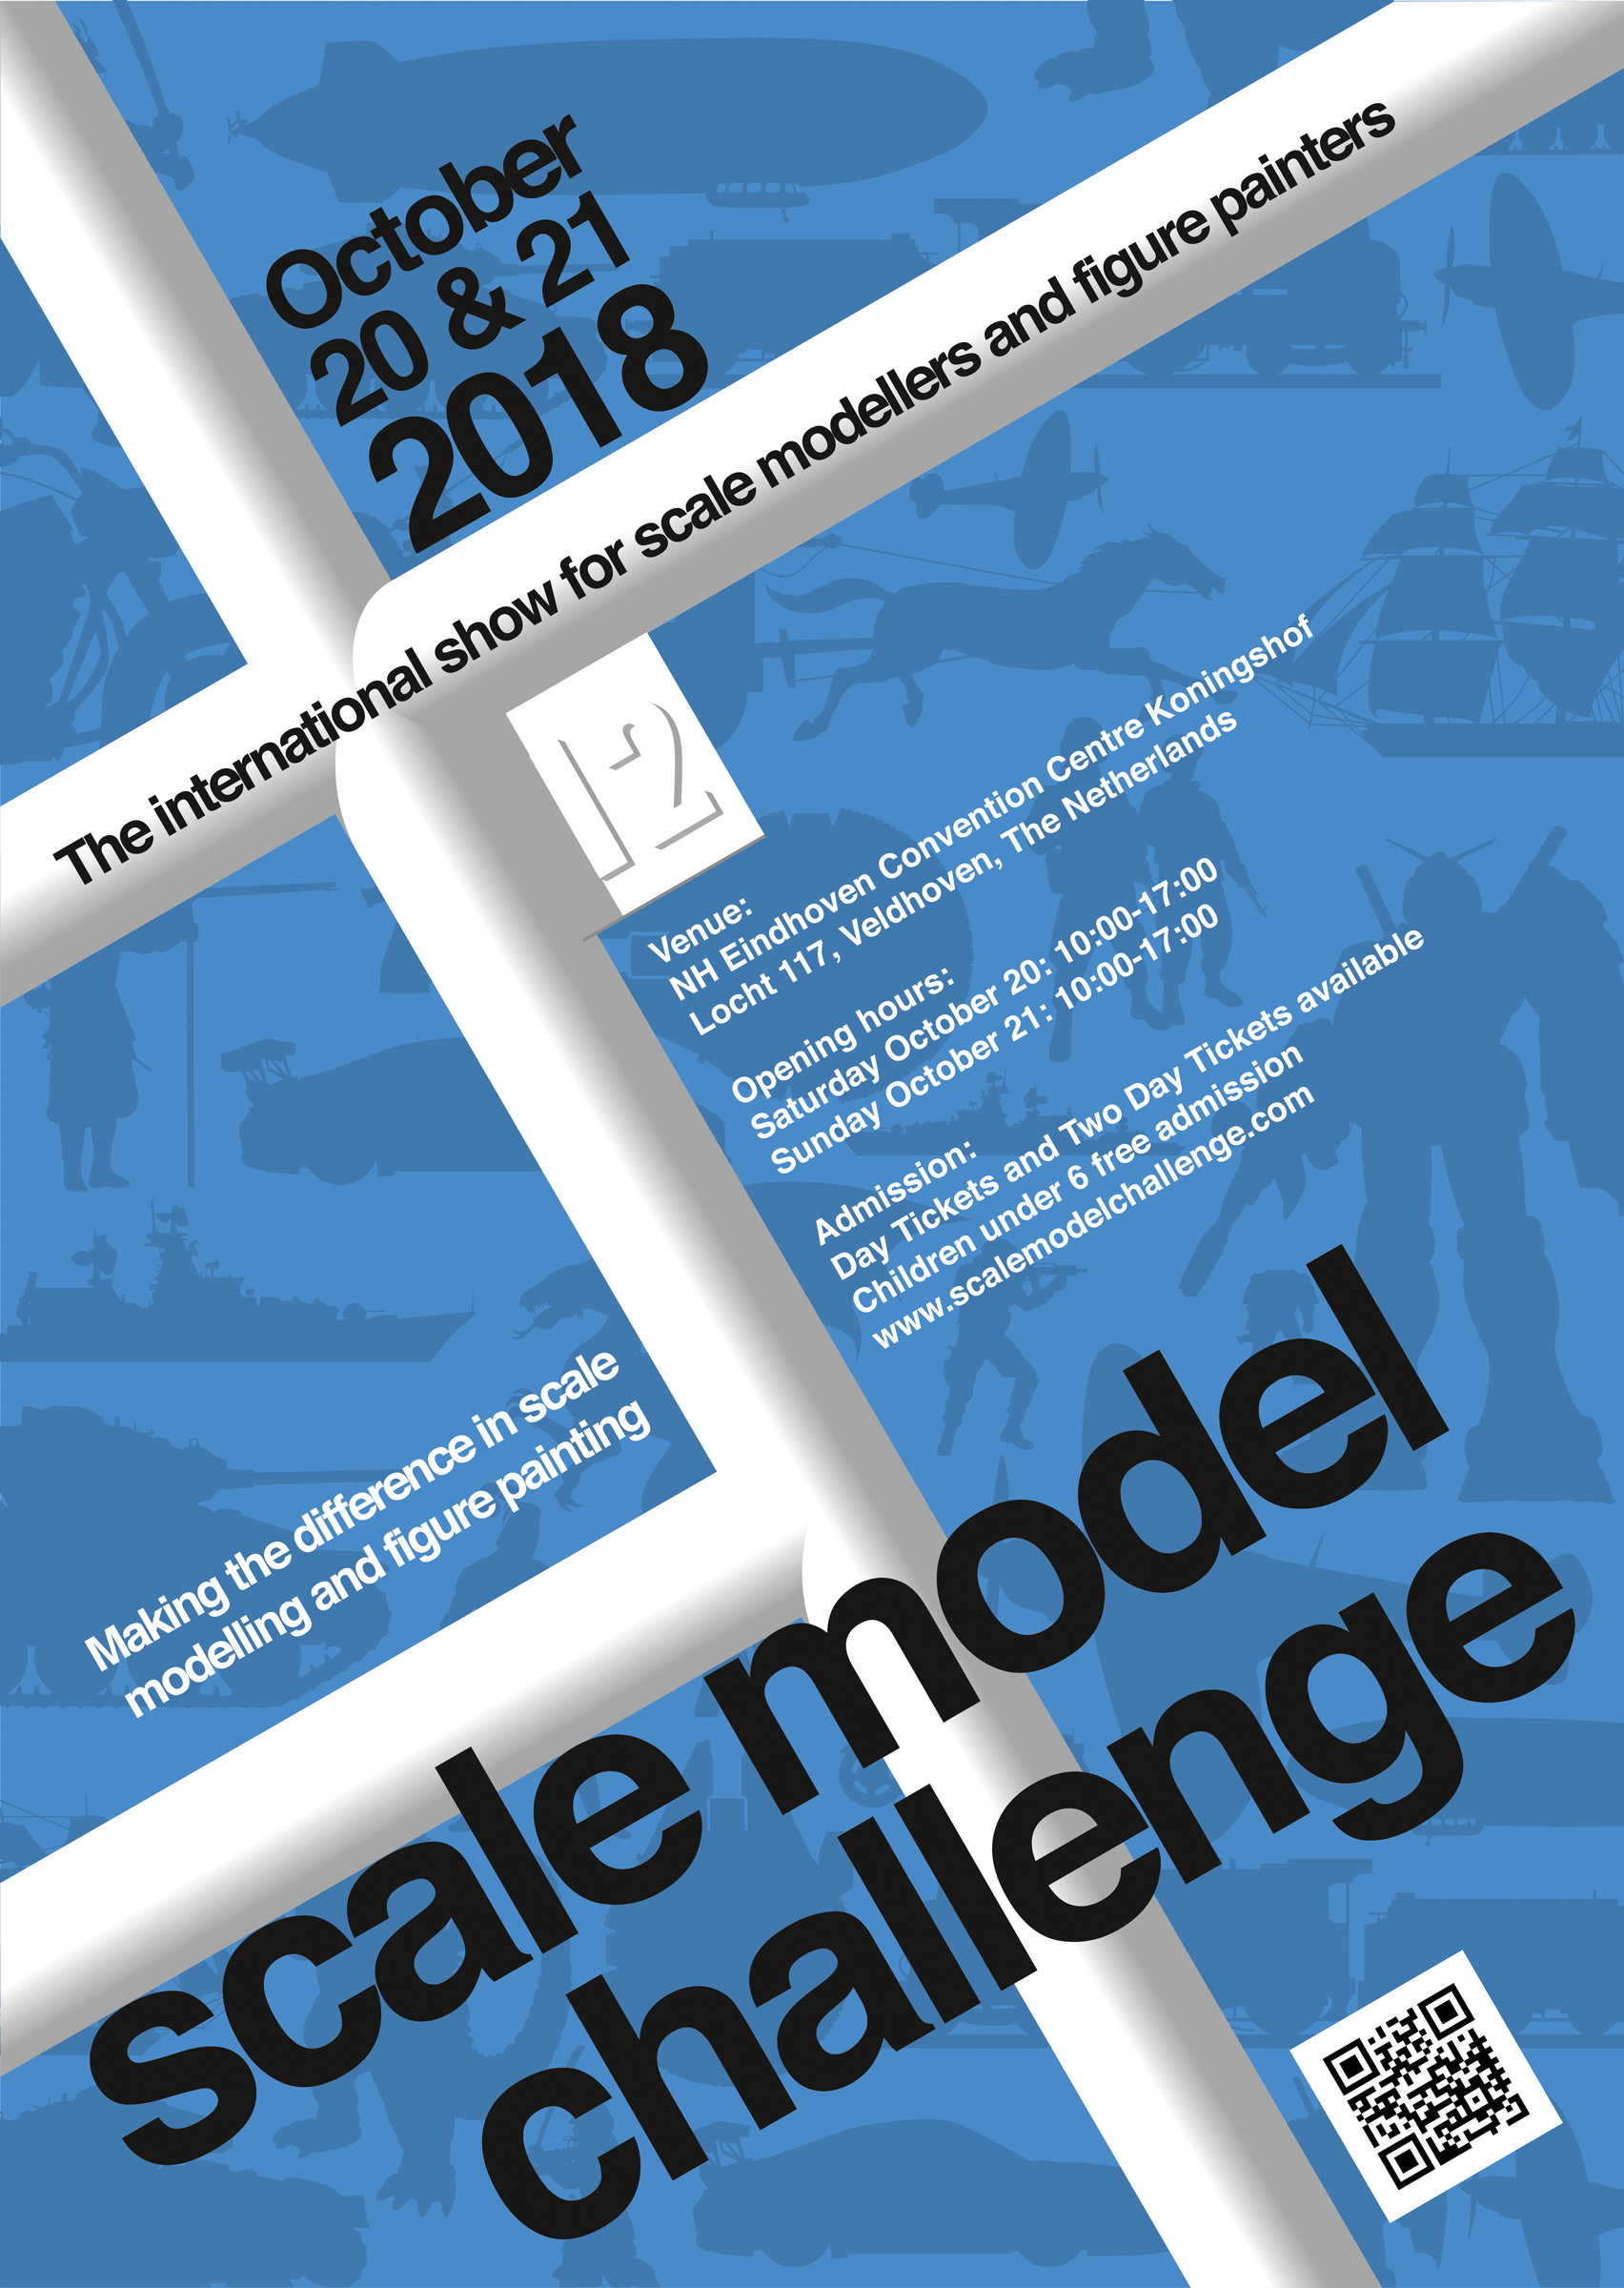 History Smc 18 Scale Model Challenge